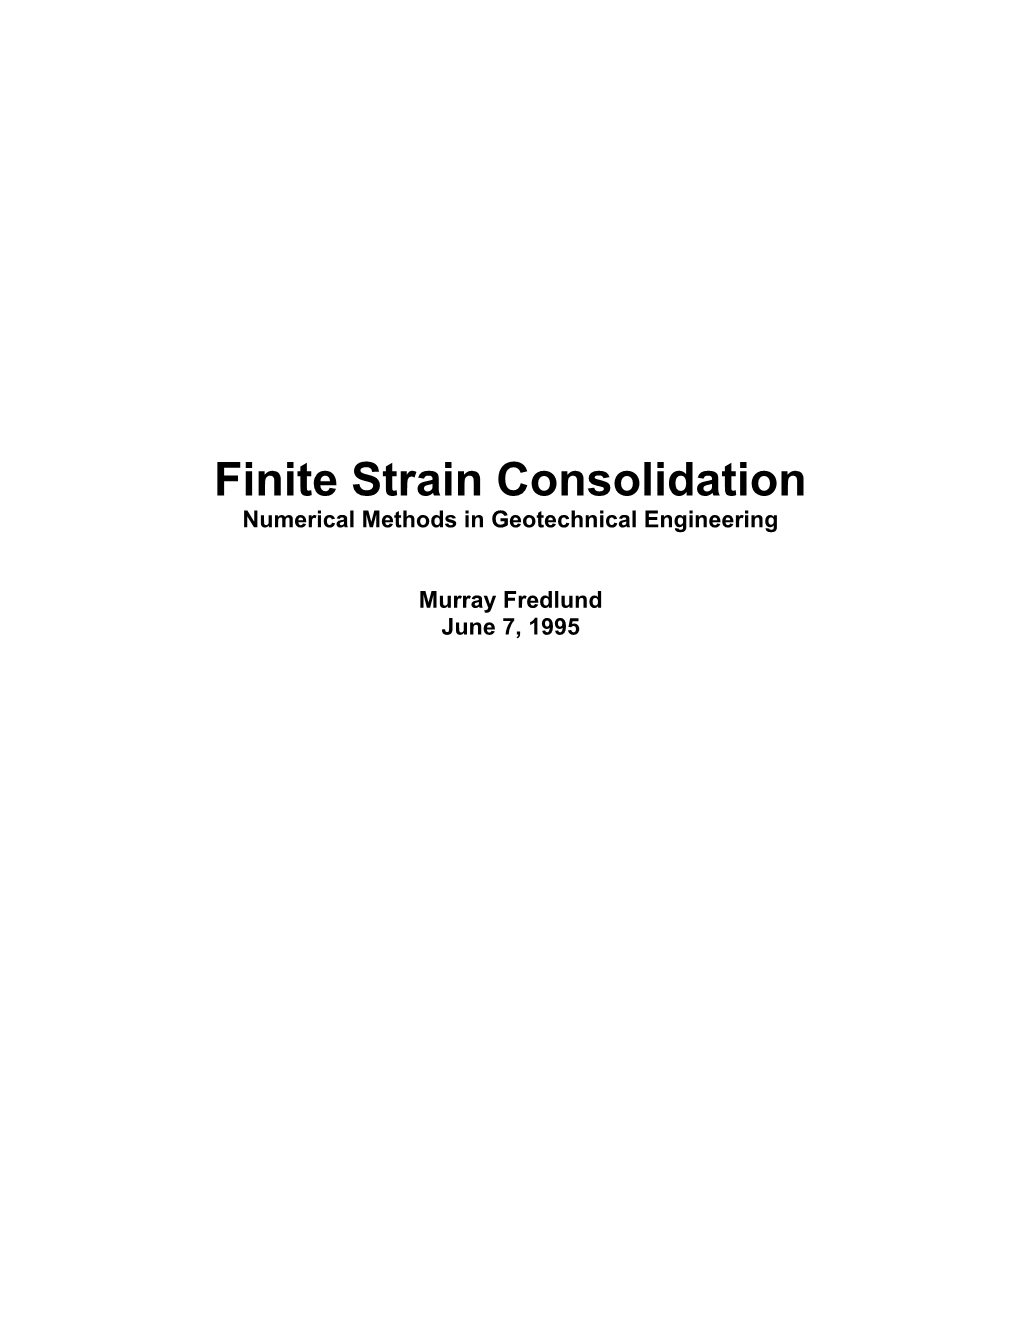 Finite Strain Consolidationpage 1Murray Fredlund